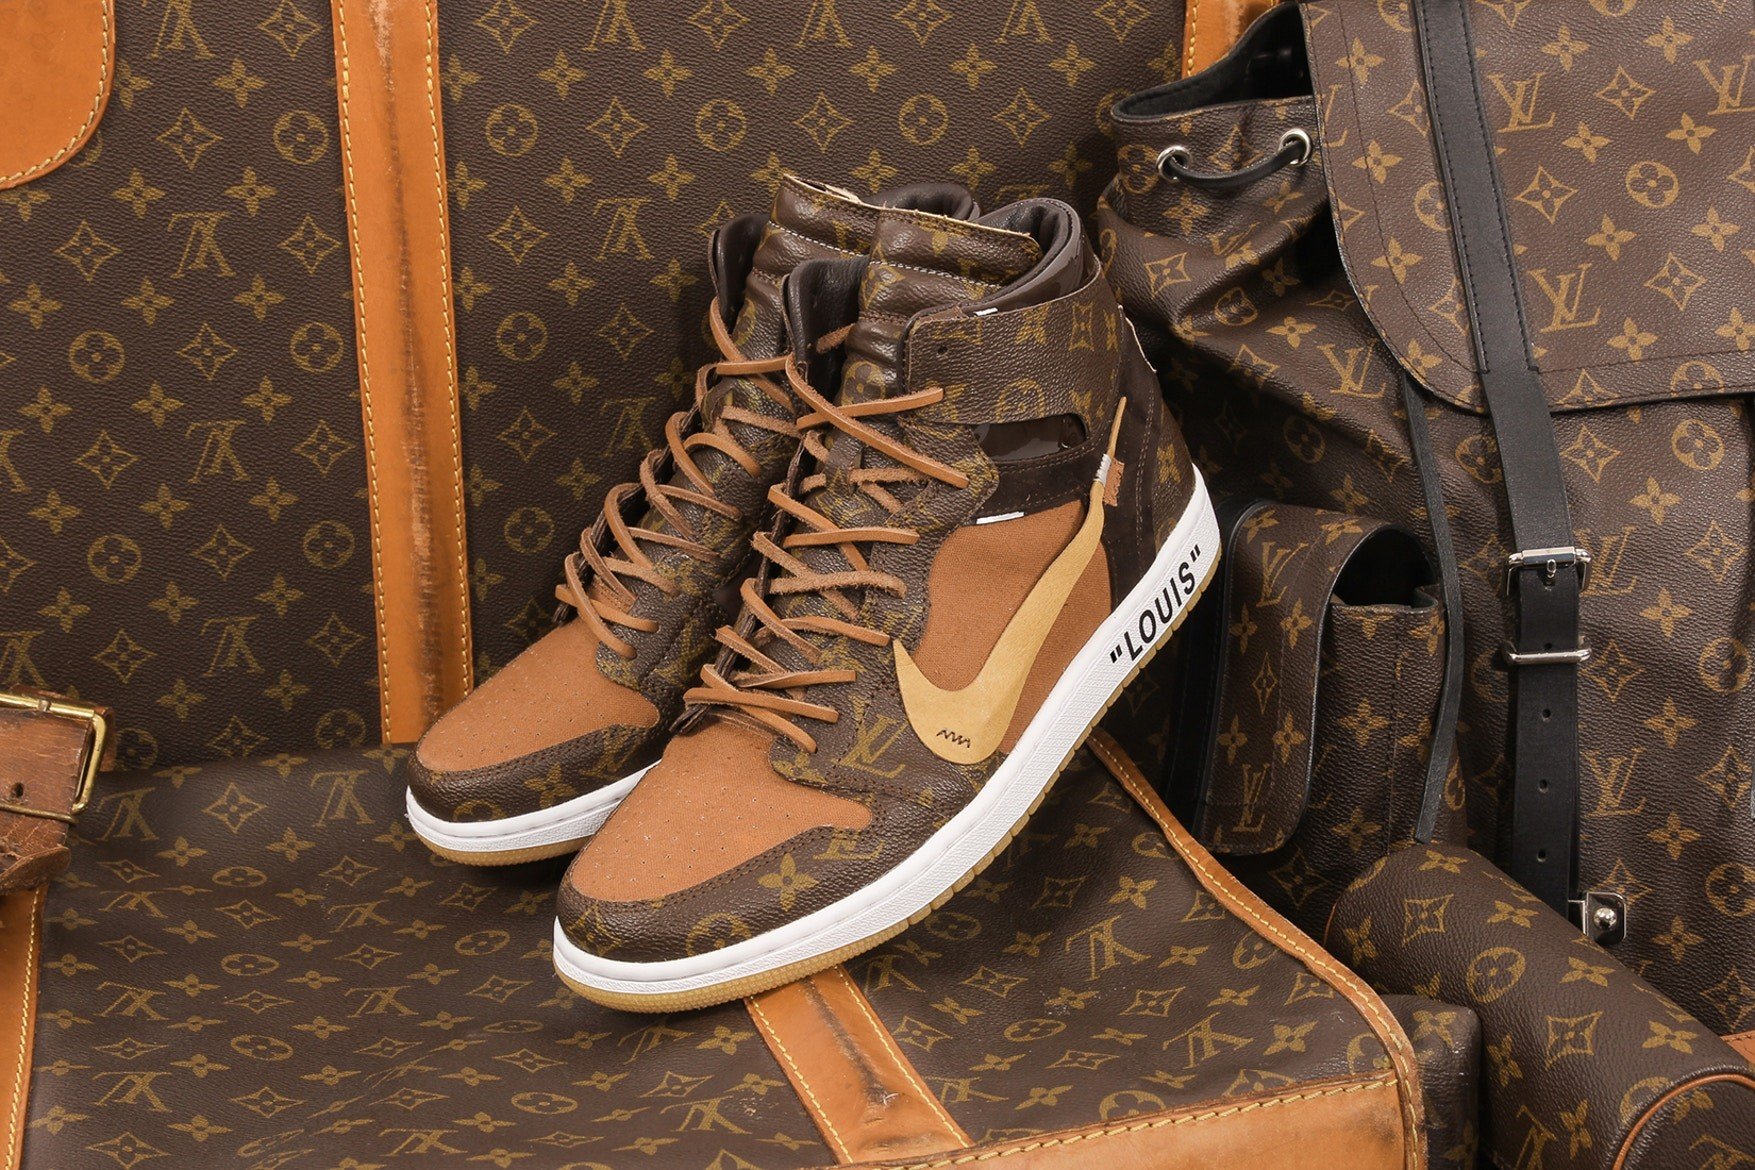 HOT Louis Vuitton Brown Style 1 Air Jordan 1 Sneakers